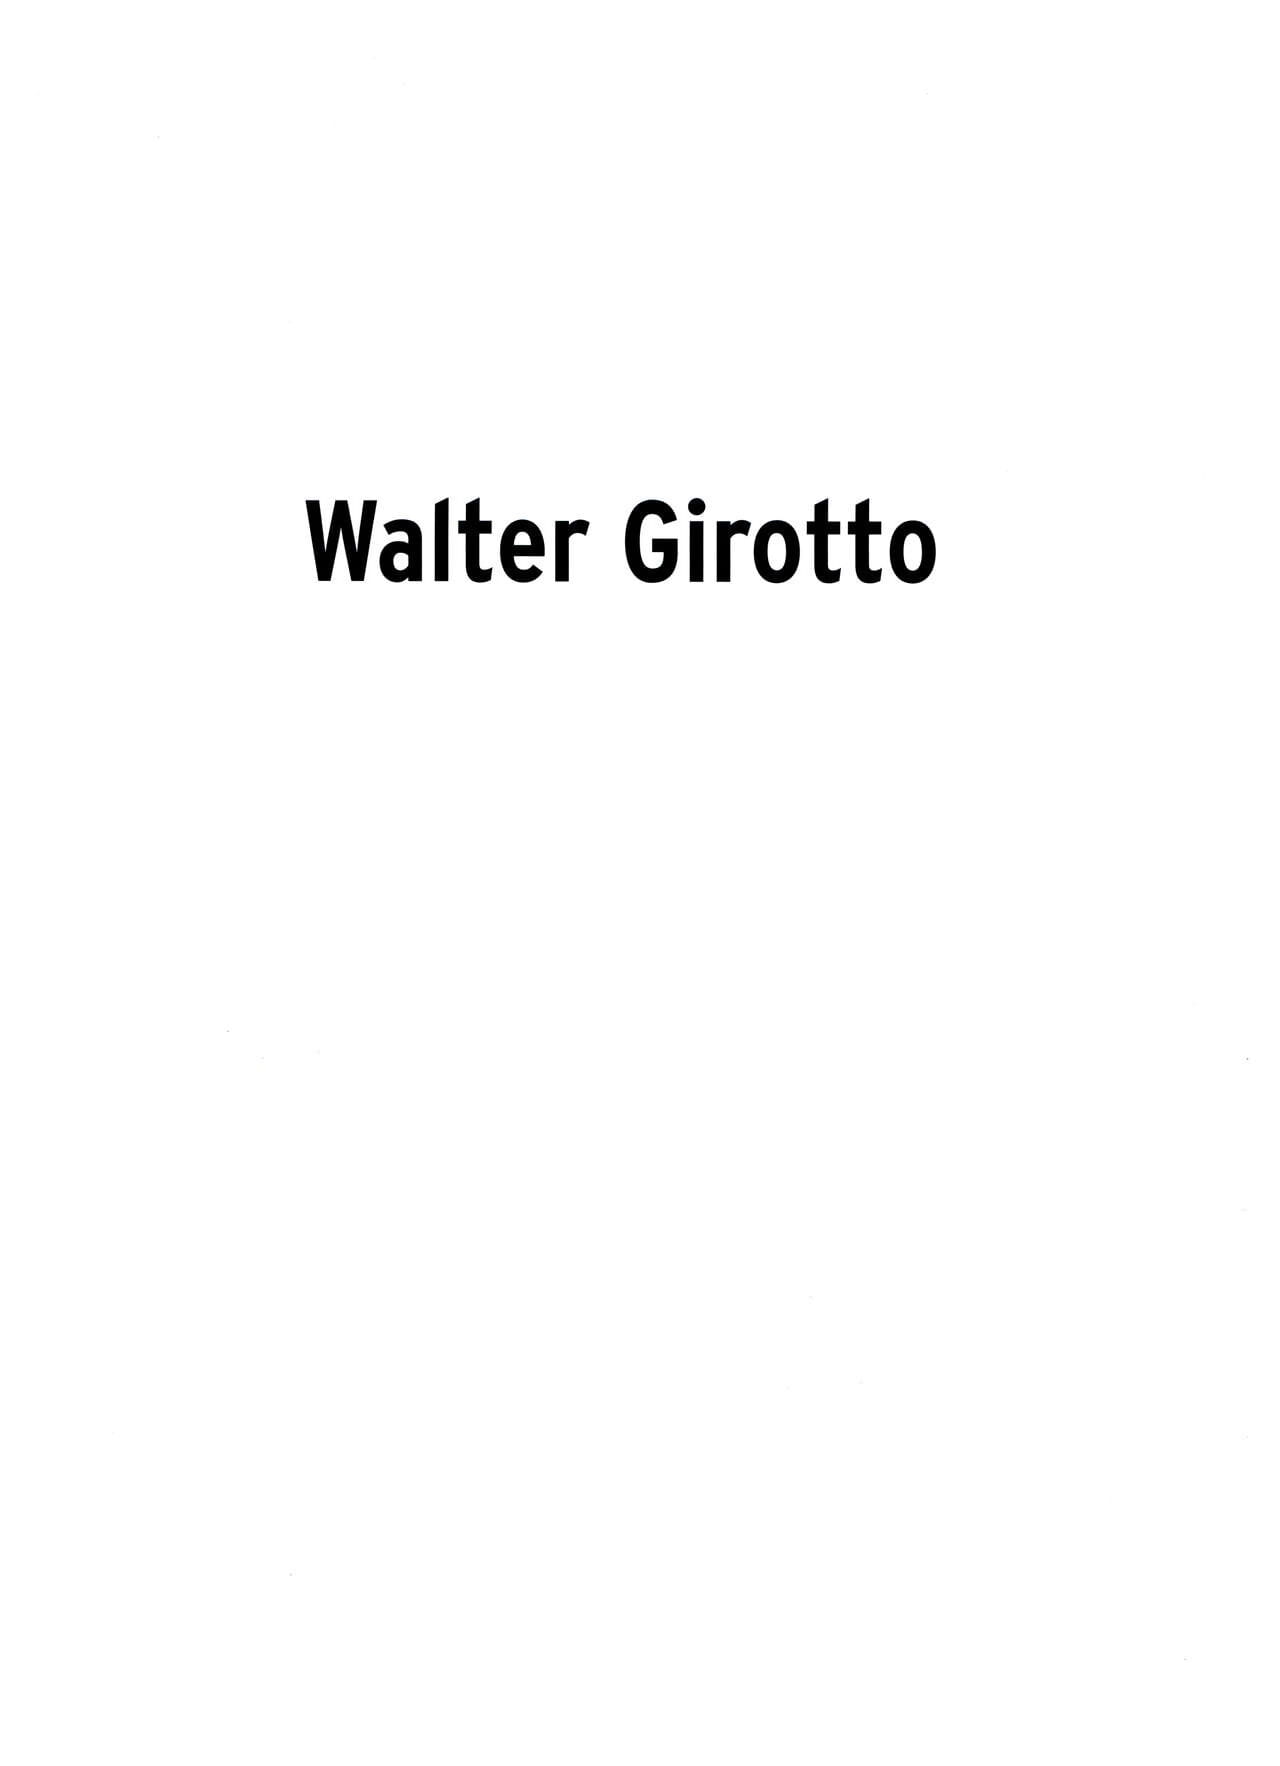 Art Fantastix #09 - The Art of Walter Girotto page 1